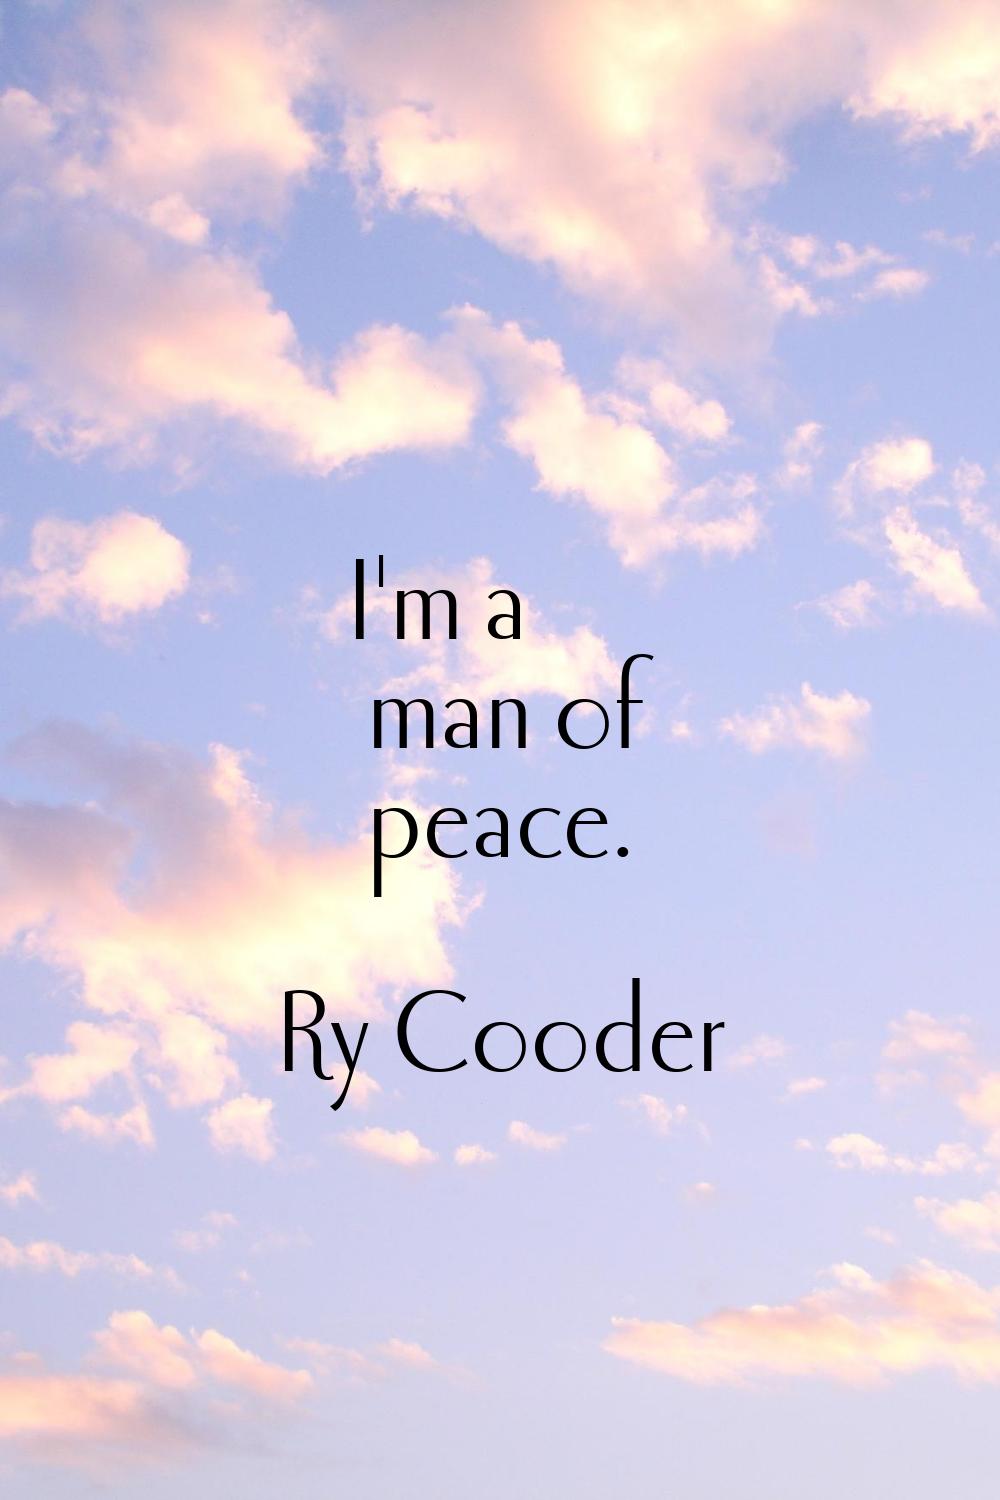 I'm a man of peace.